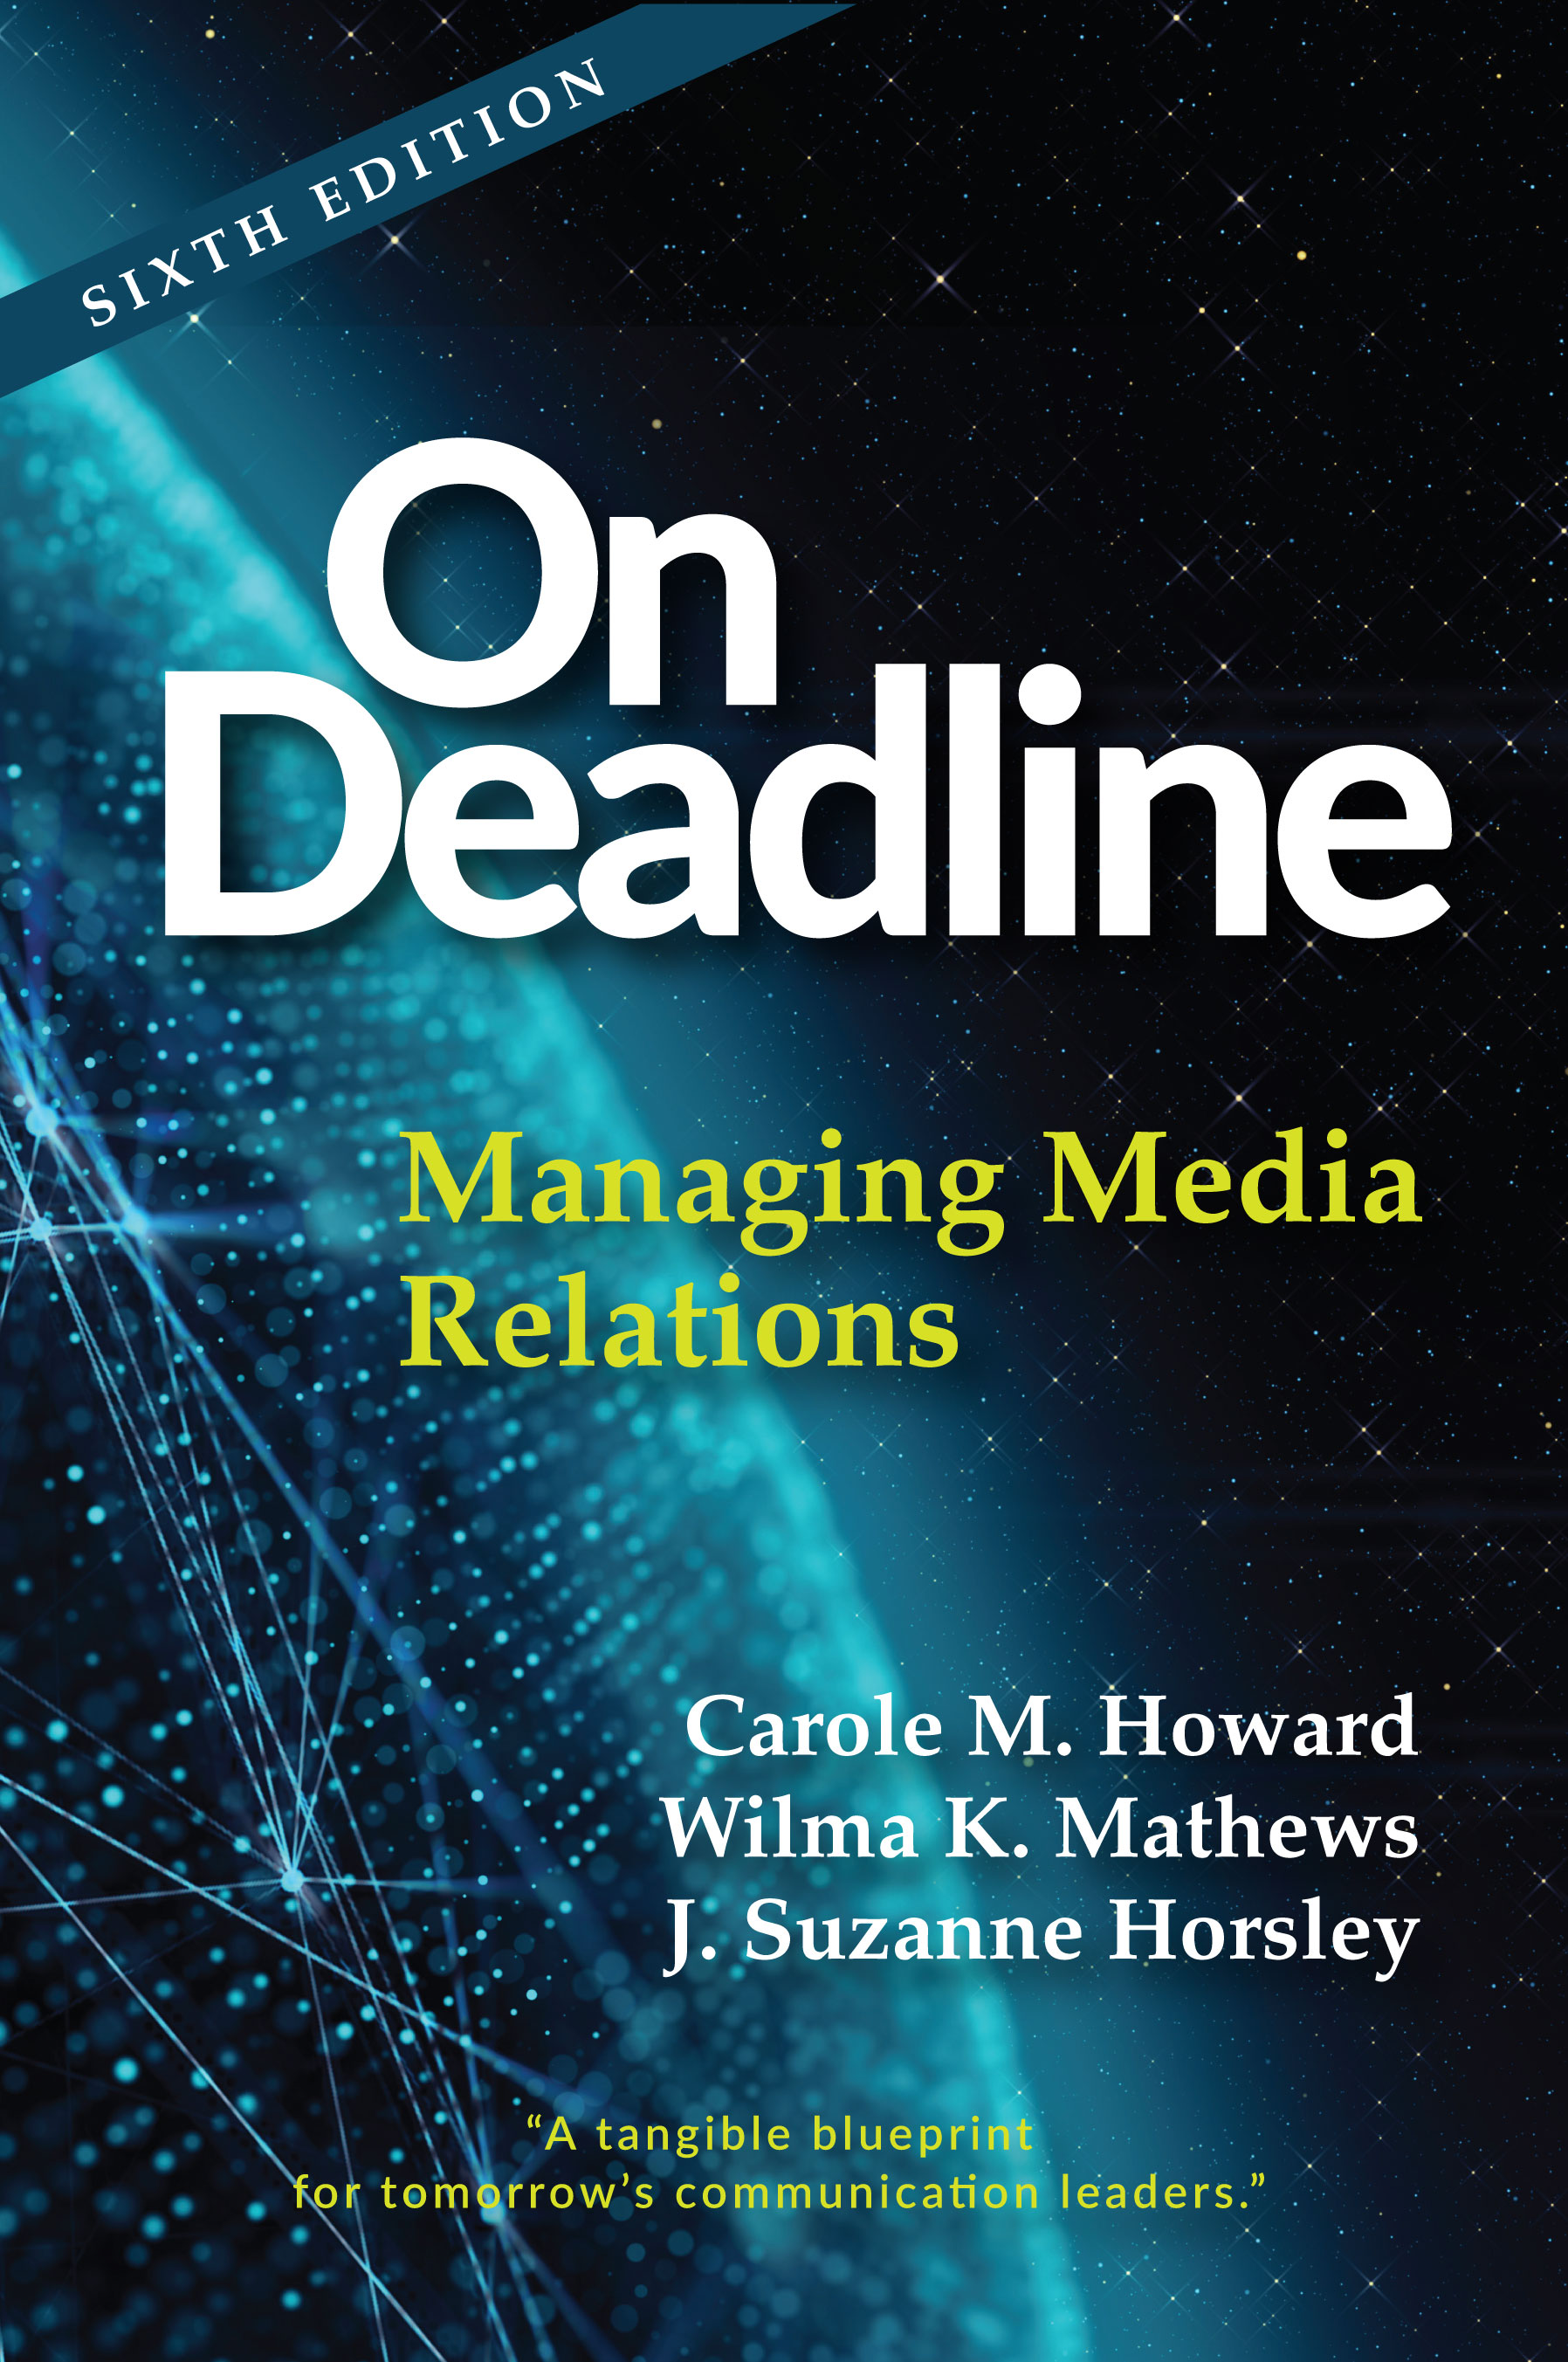 On Deadline: Managing Media Relations, Sixth Edition by Carole M. Howard, Wilma K. Mathews, J. Suzanne Horsley